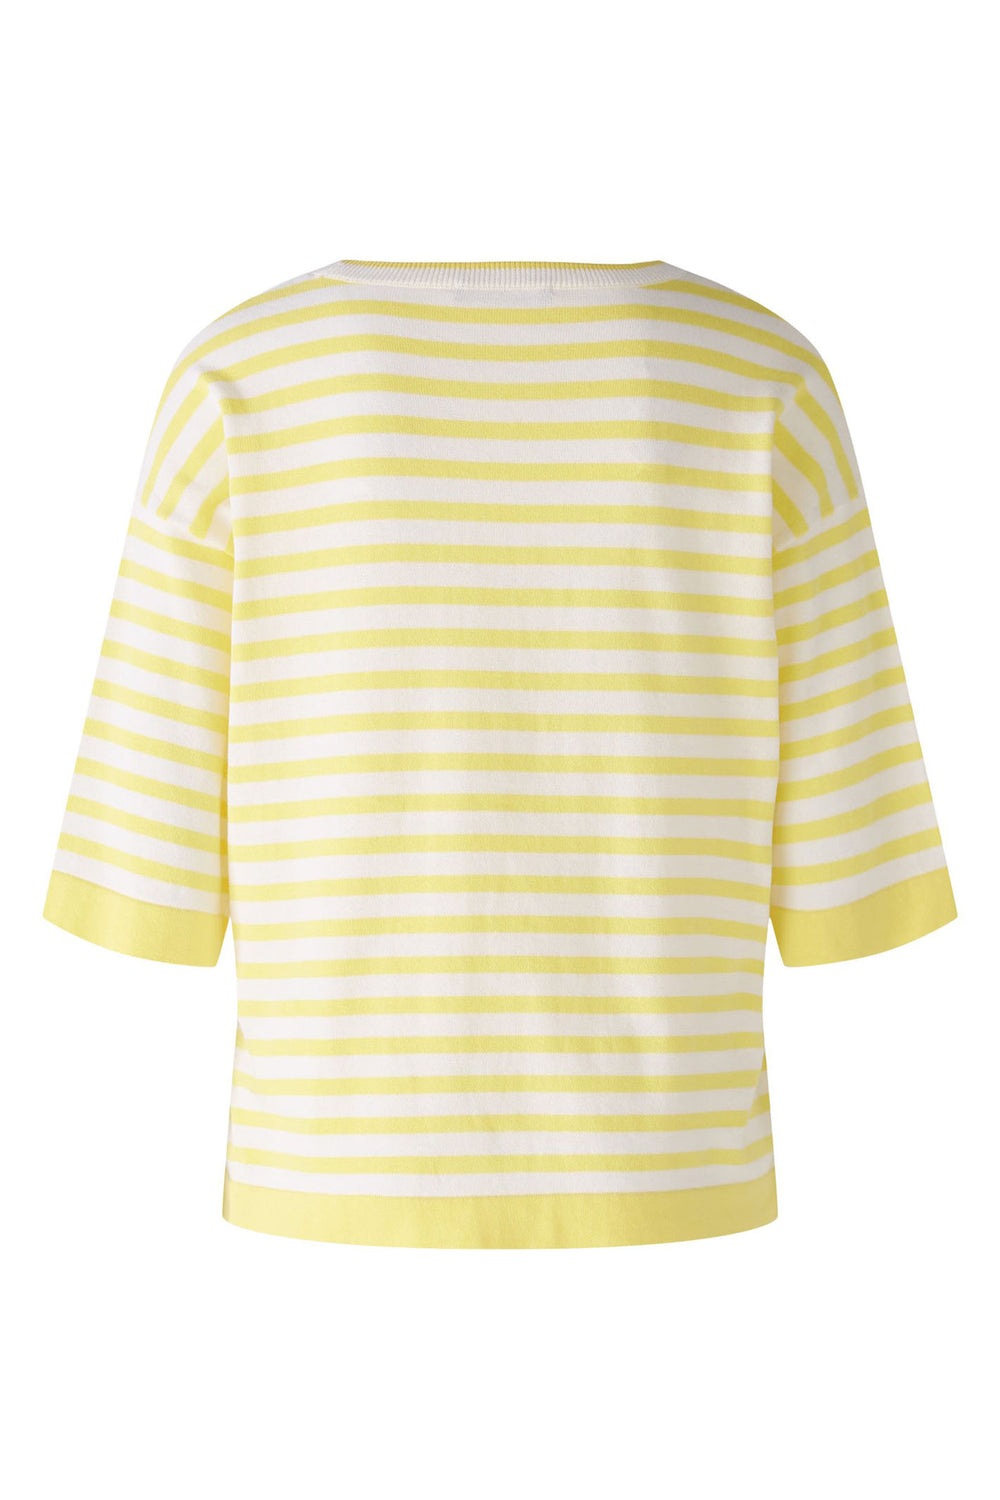 Oui 87474 Yellow White Stripe Sequin Lemon Jumper - Olivia Grace Fashion